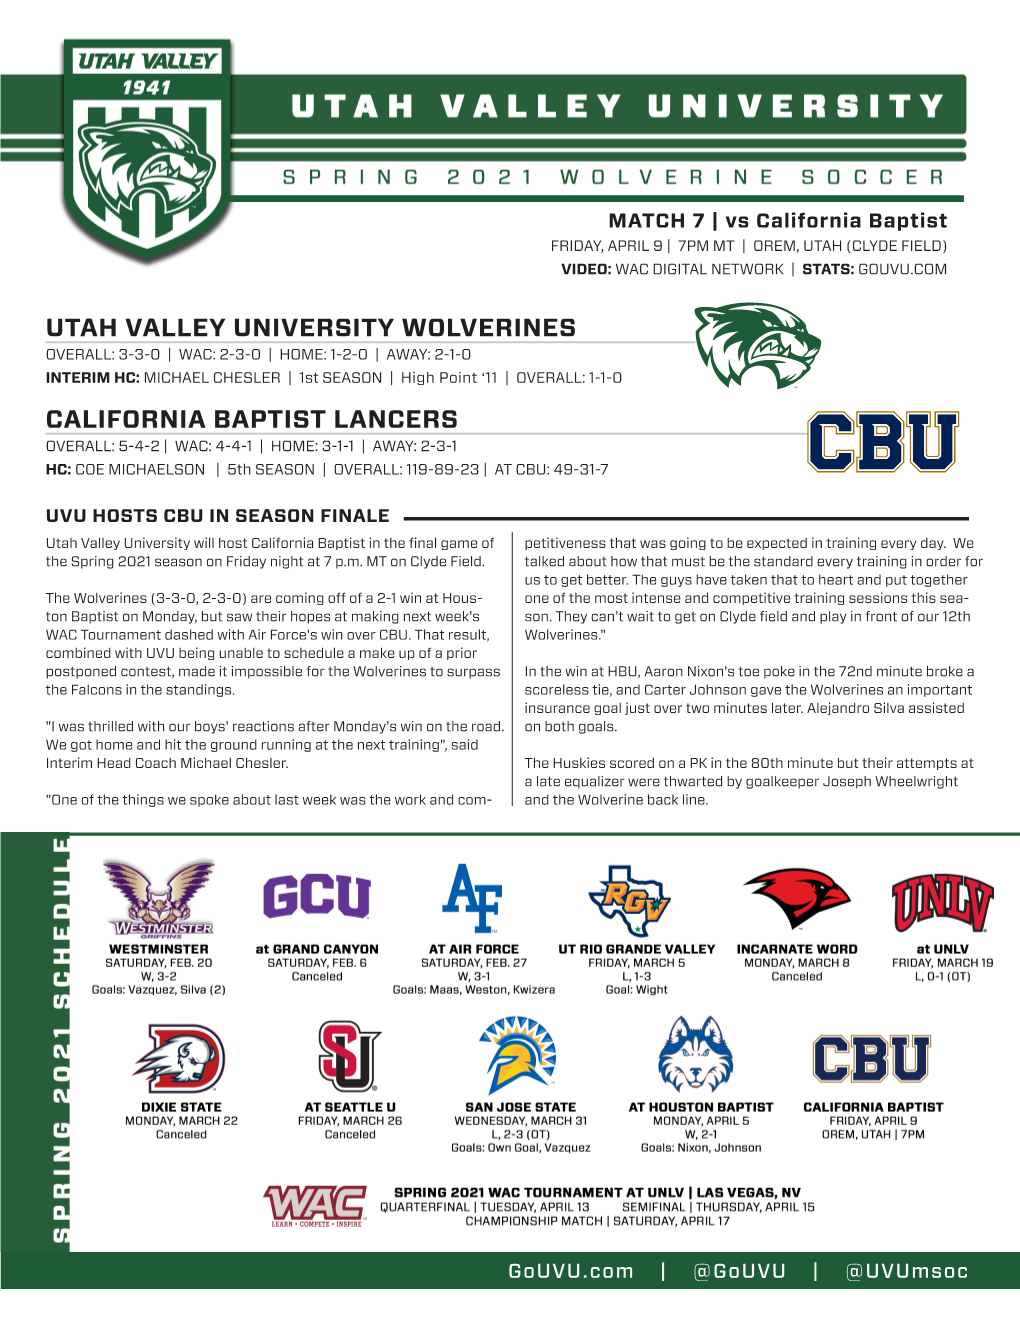 Utah Valley University Wolverines California